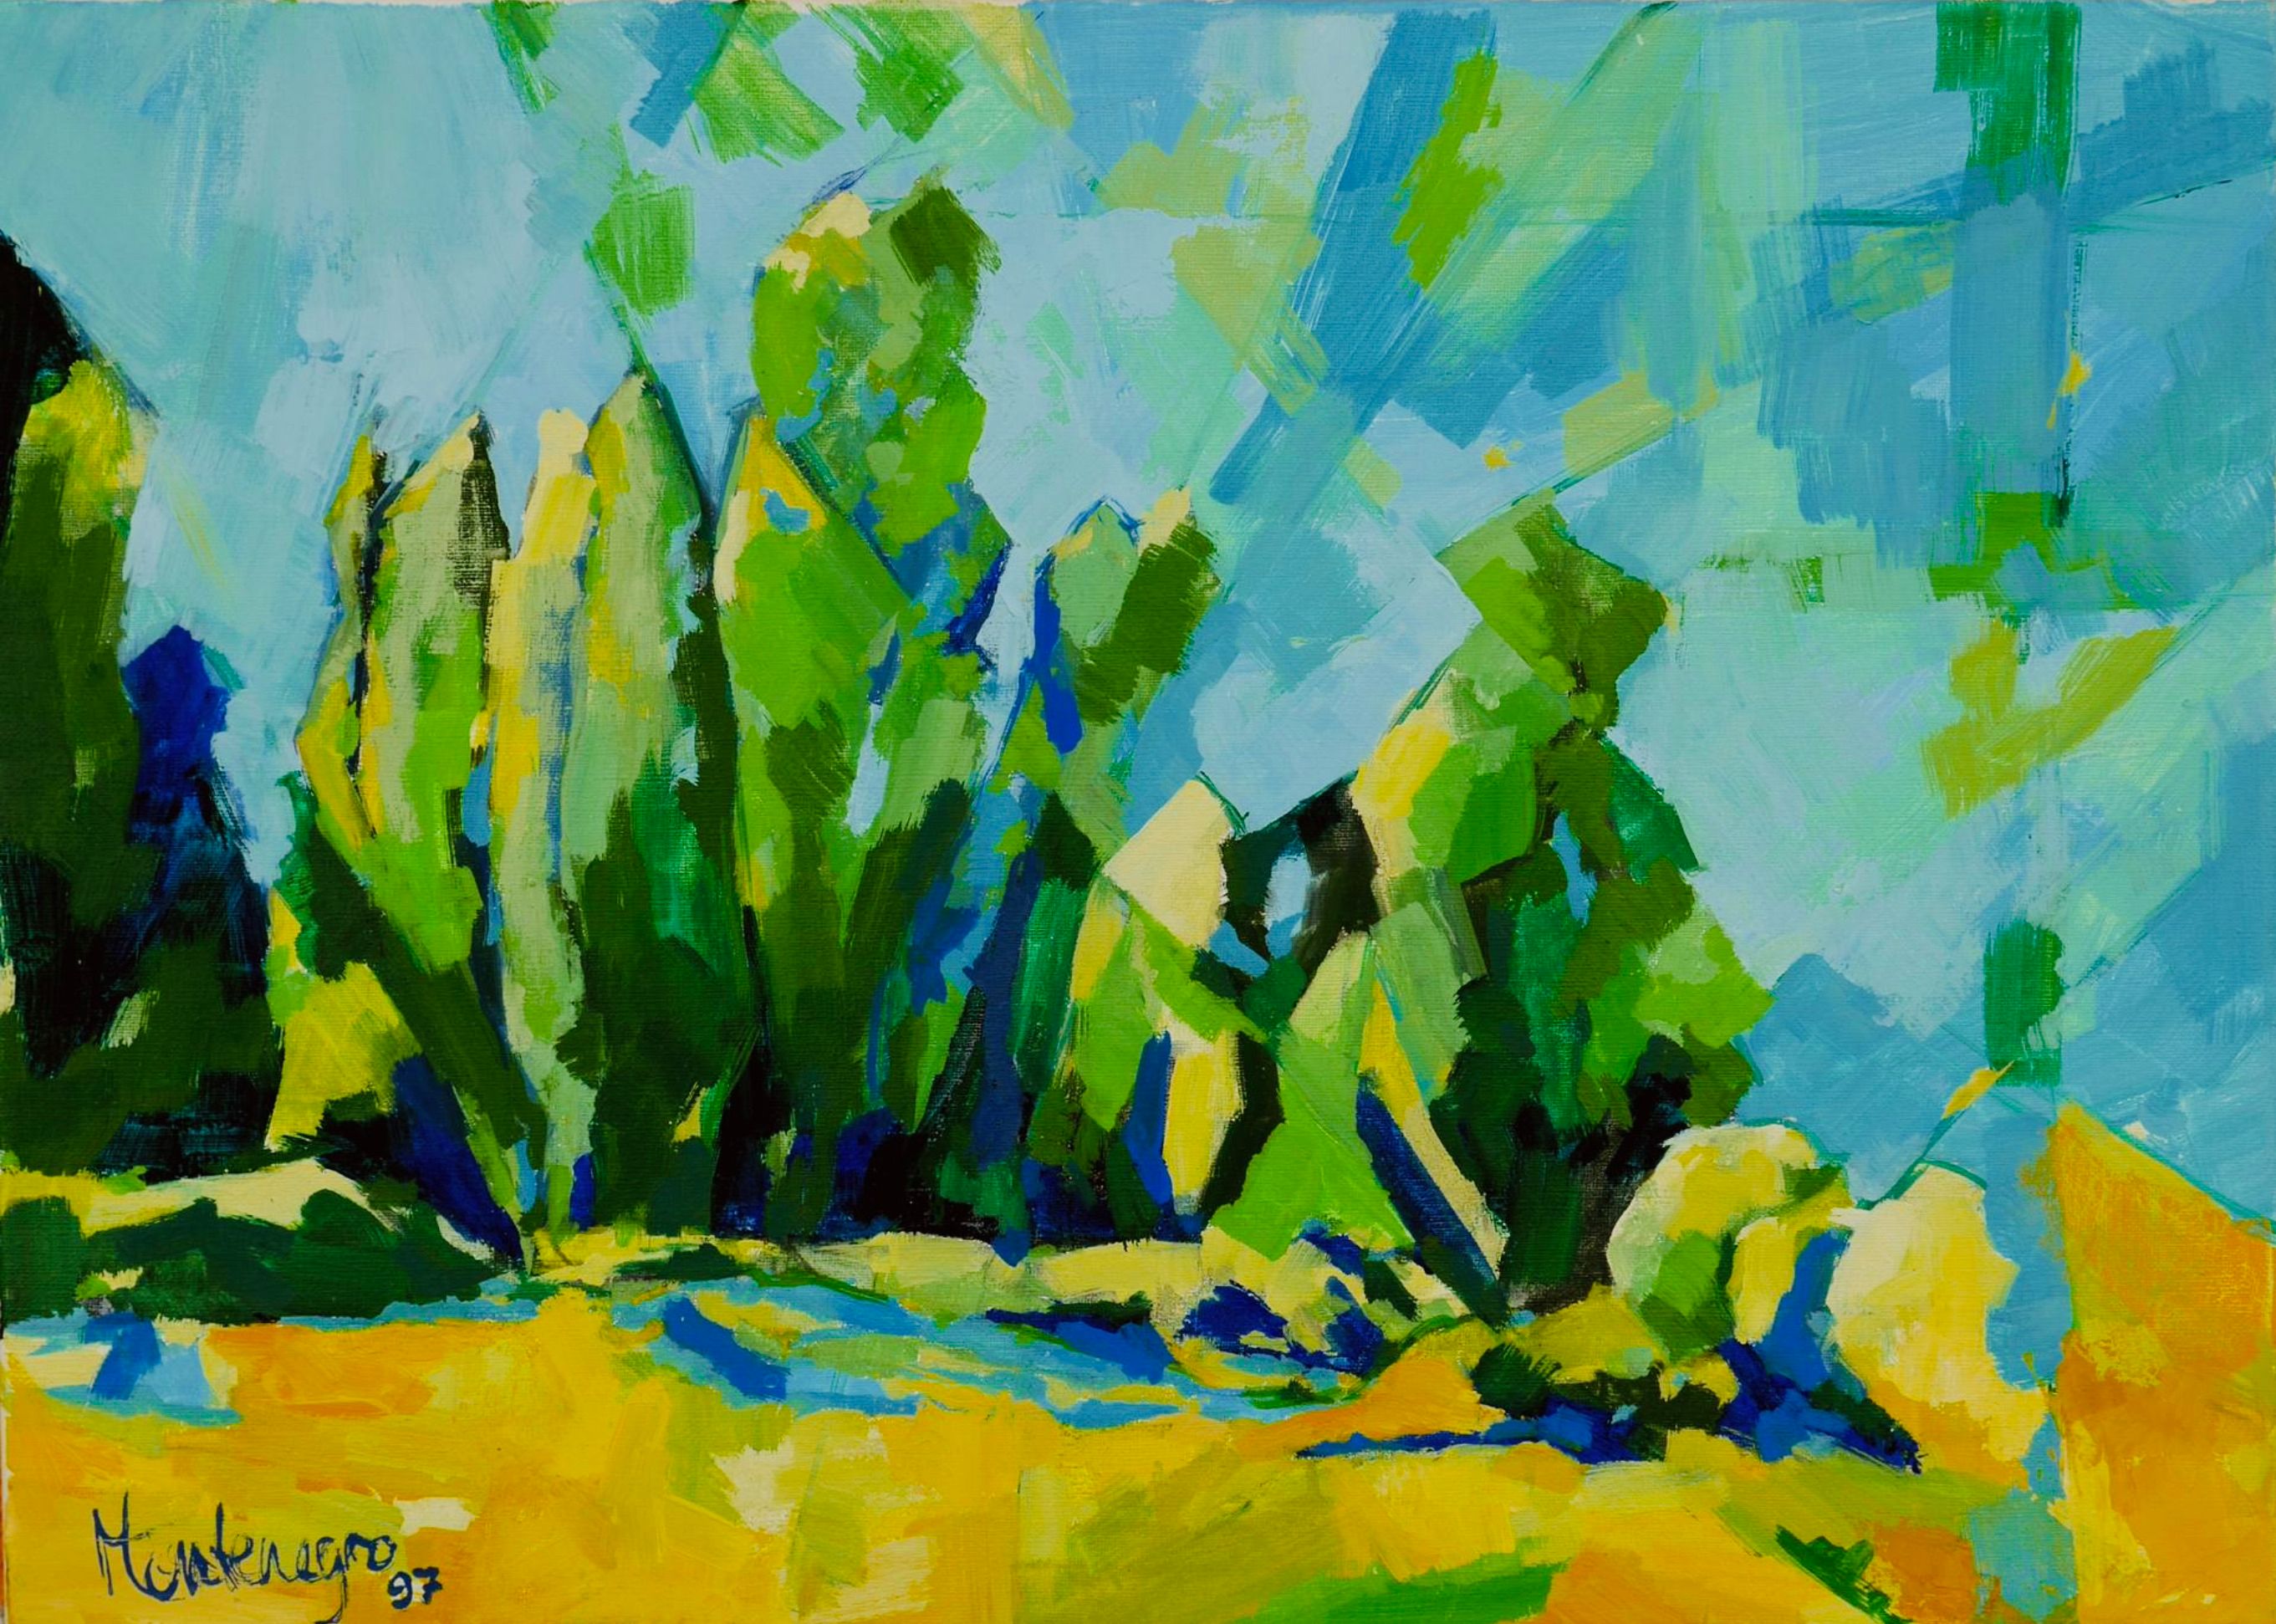 Miriam Montenegro Pintura expresionista Paisaje con plantas verdes